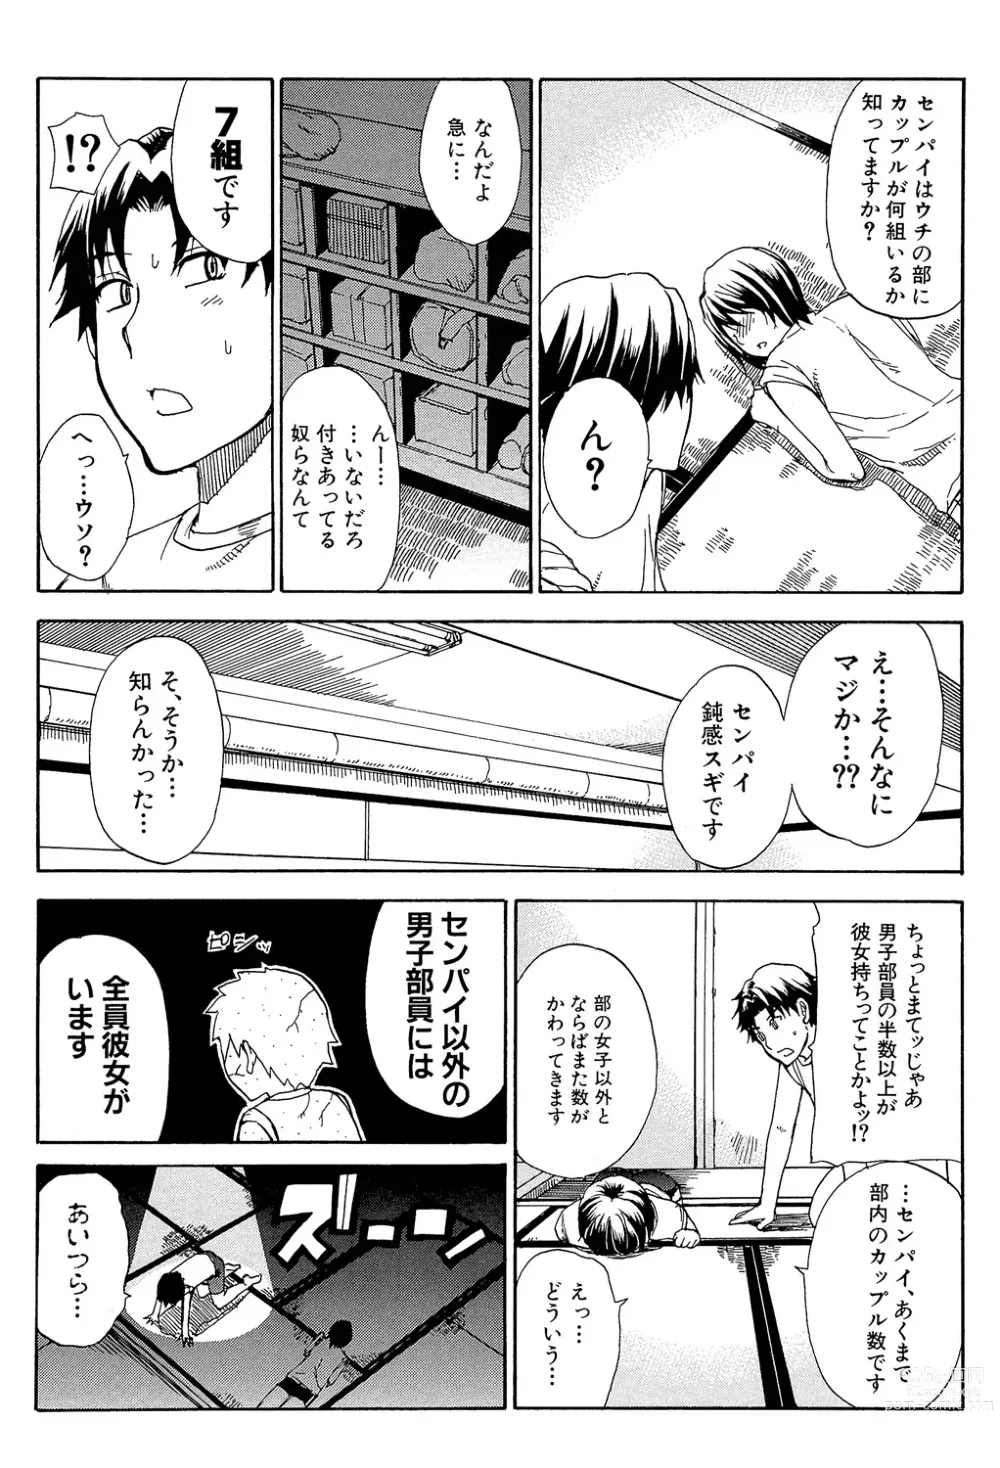 Page 7 of manga Nee, Mou Sukoshi Dake...